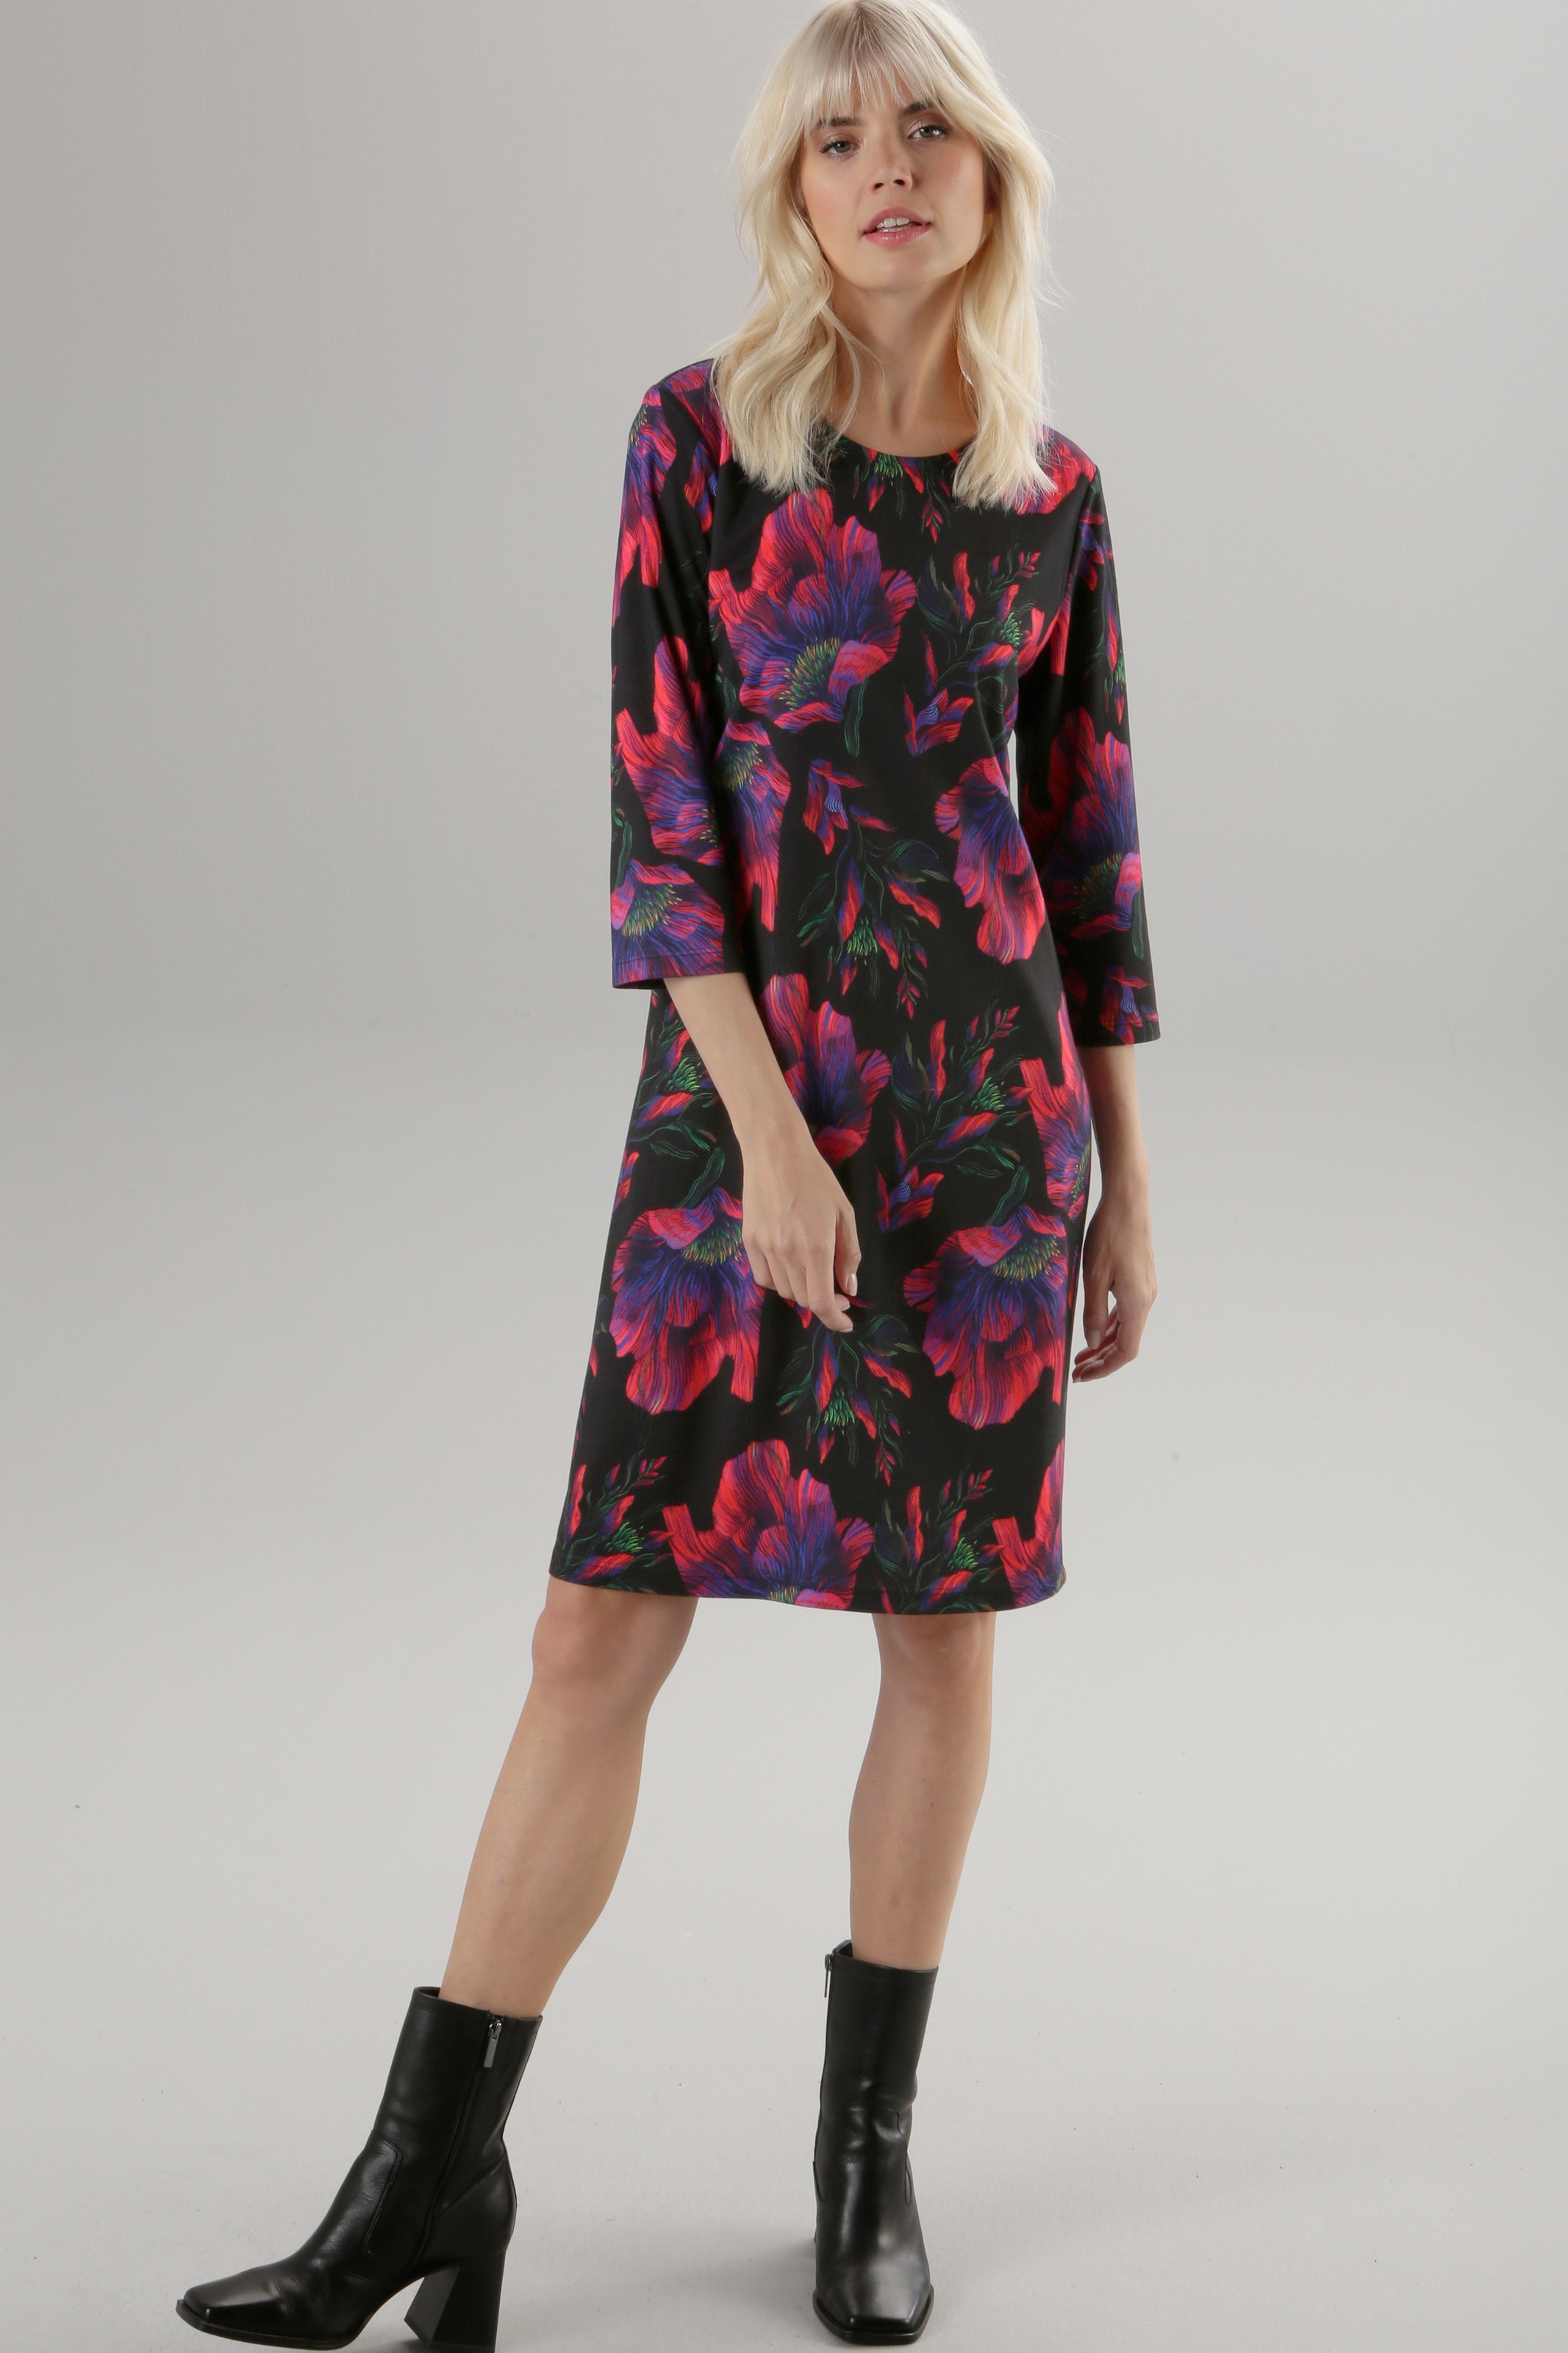 Aniston SELECTED Jerseykleid, mit Blumendruck in Knallfarben bei